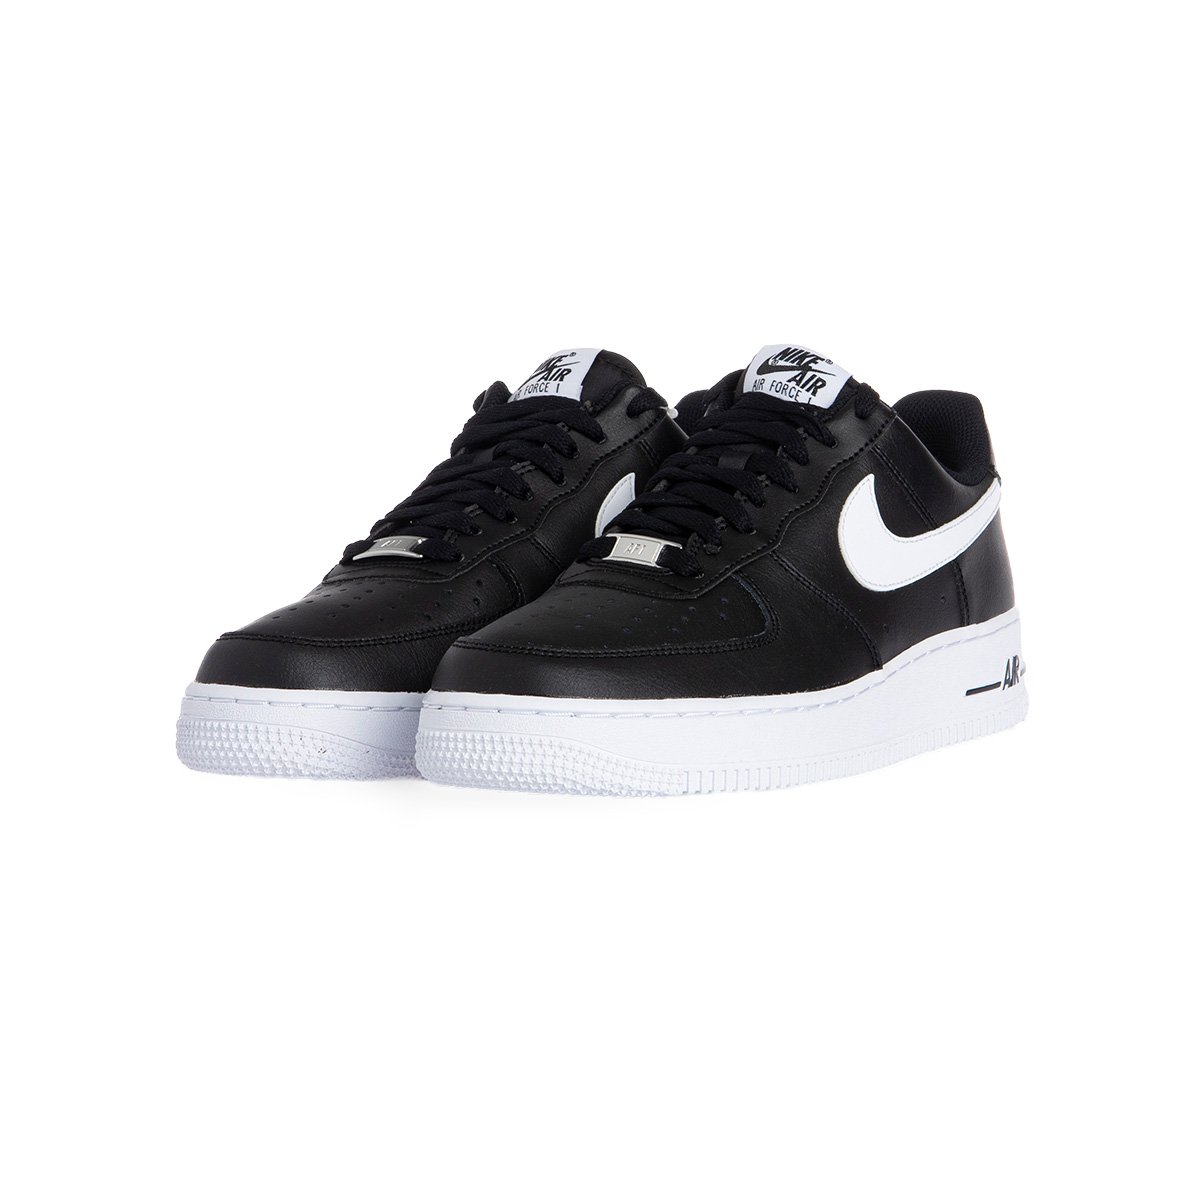 Sneakers Nike Air Force 1 '07 AN20 black/white (CJ0952-001) | Bludshop.com